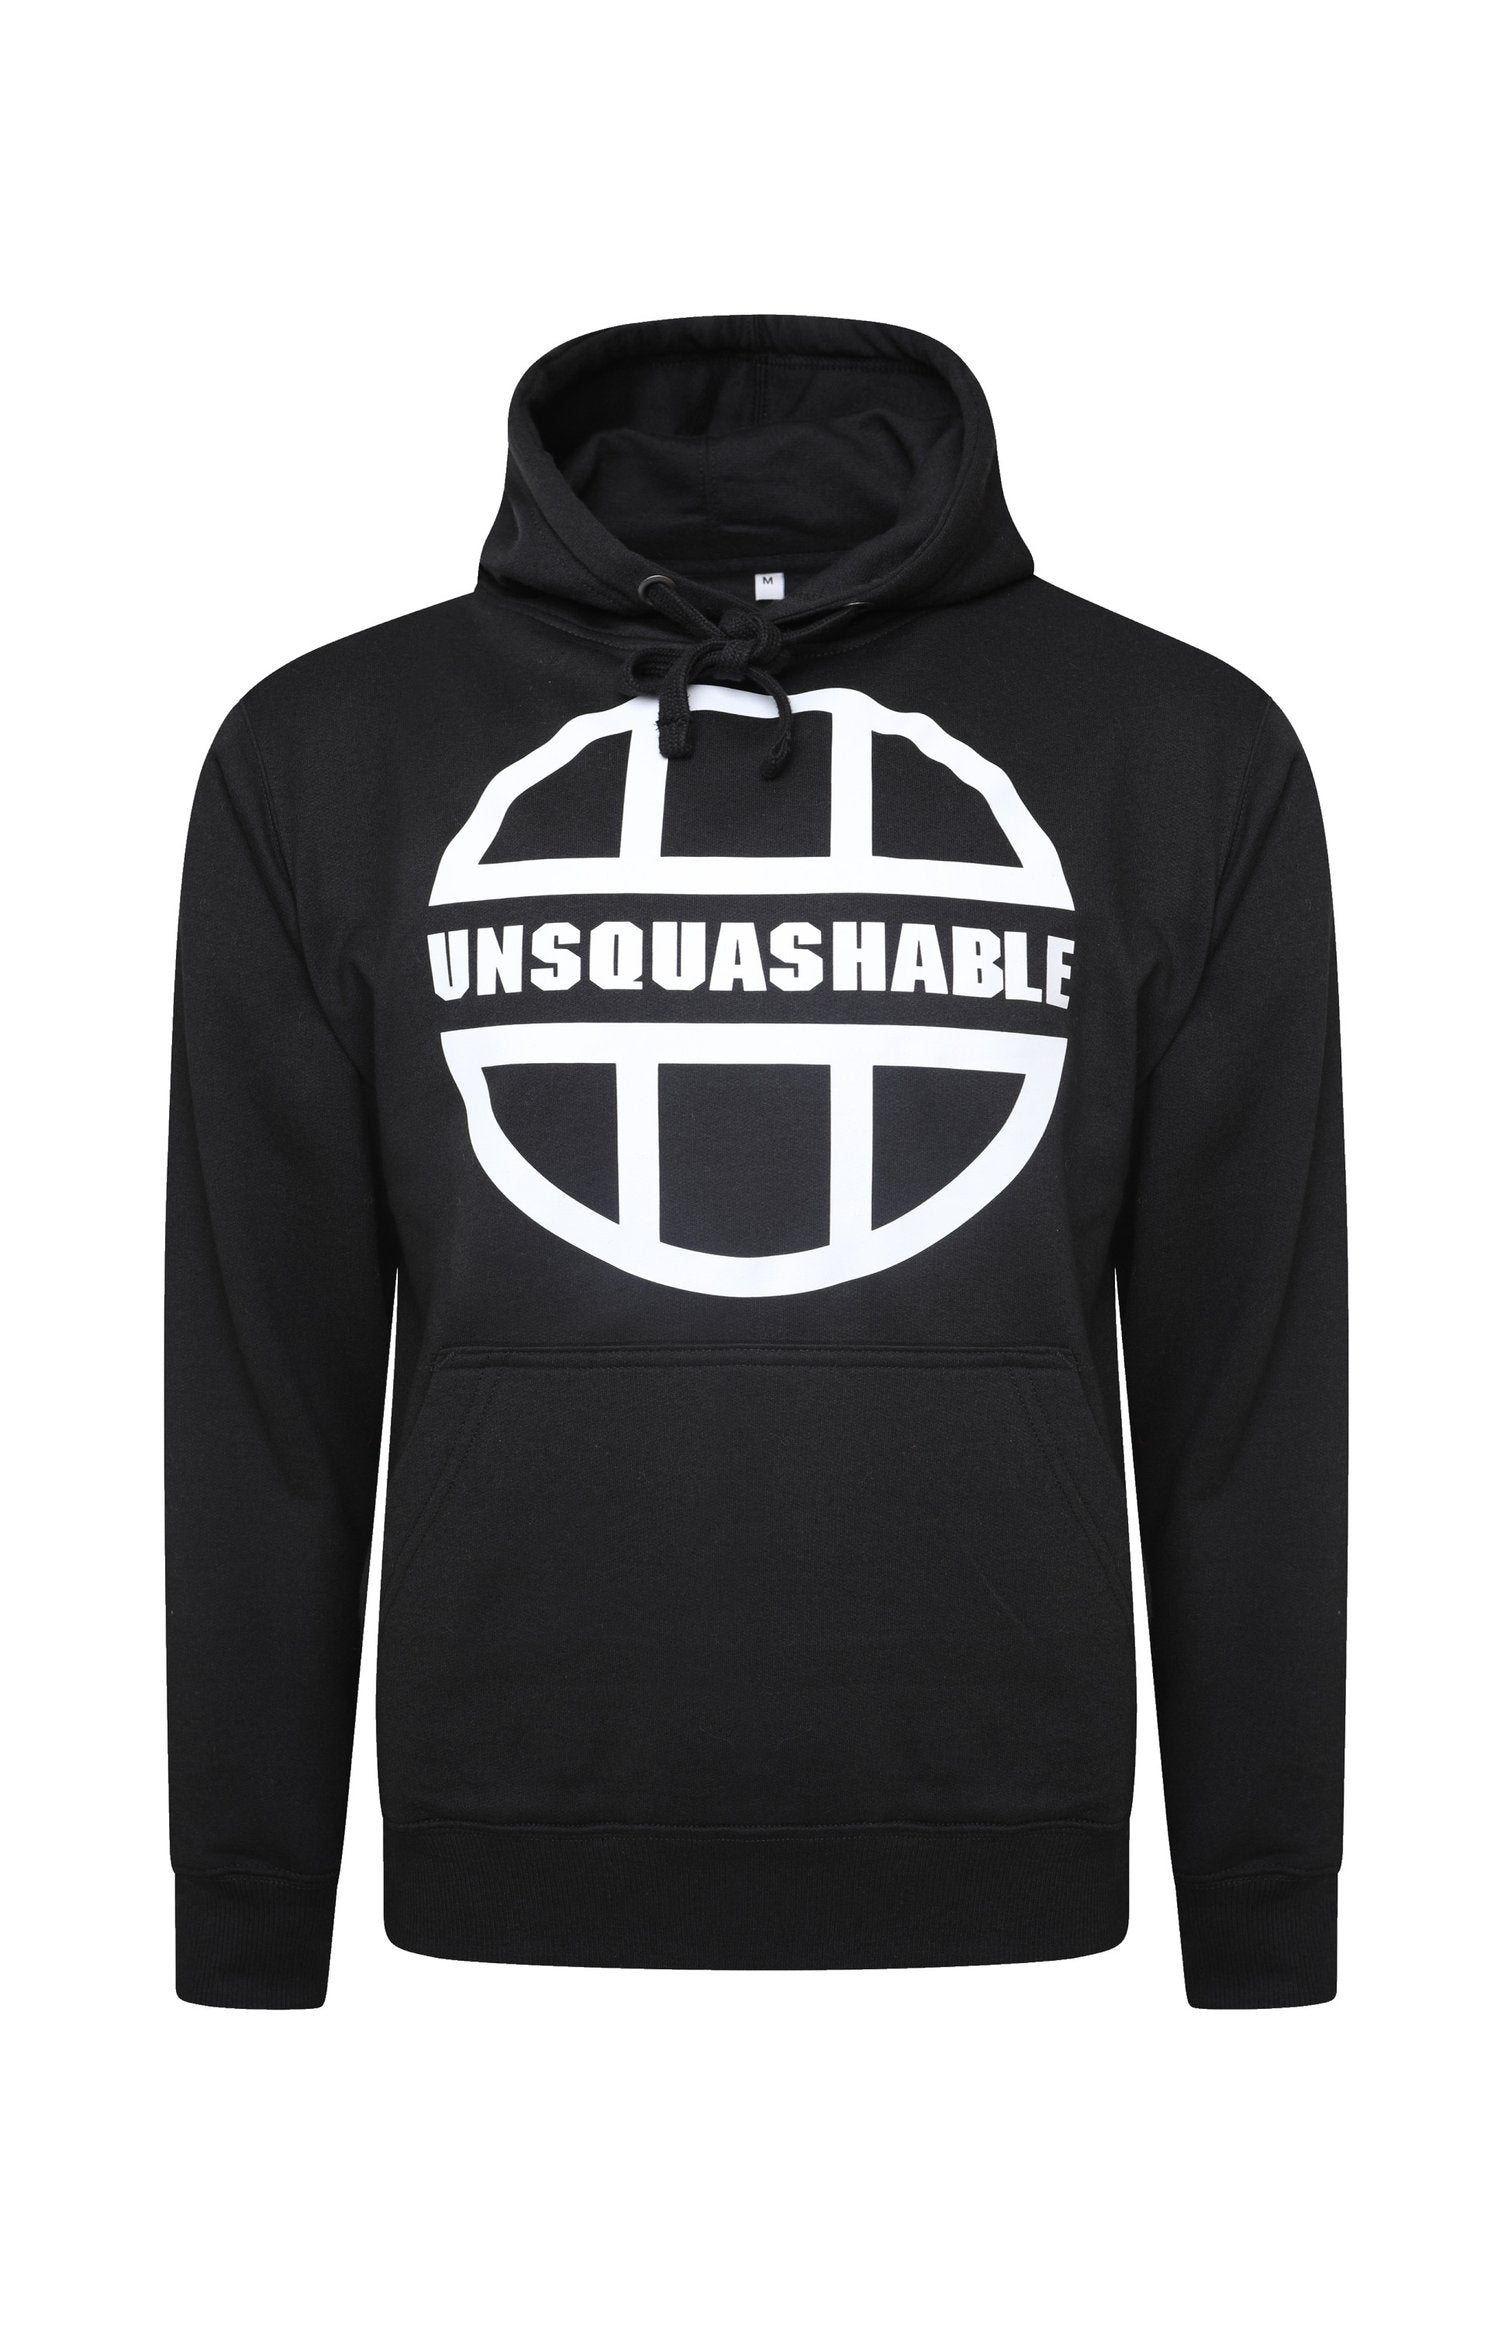 UNSQUASHABLE Original Hoodie - black and white logo